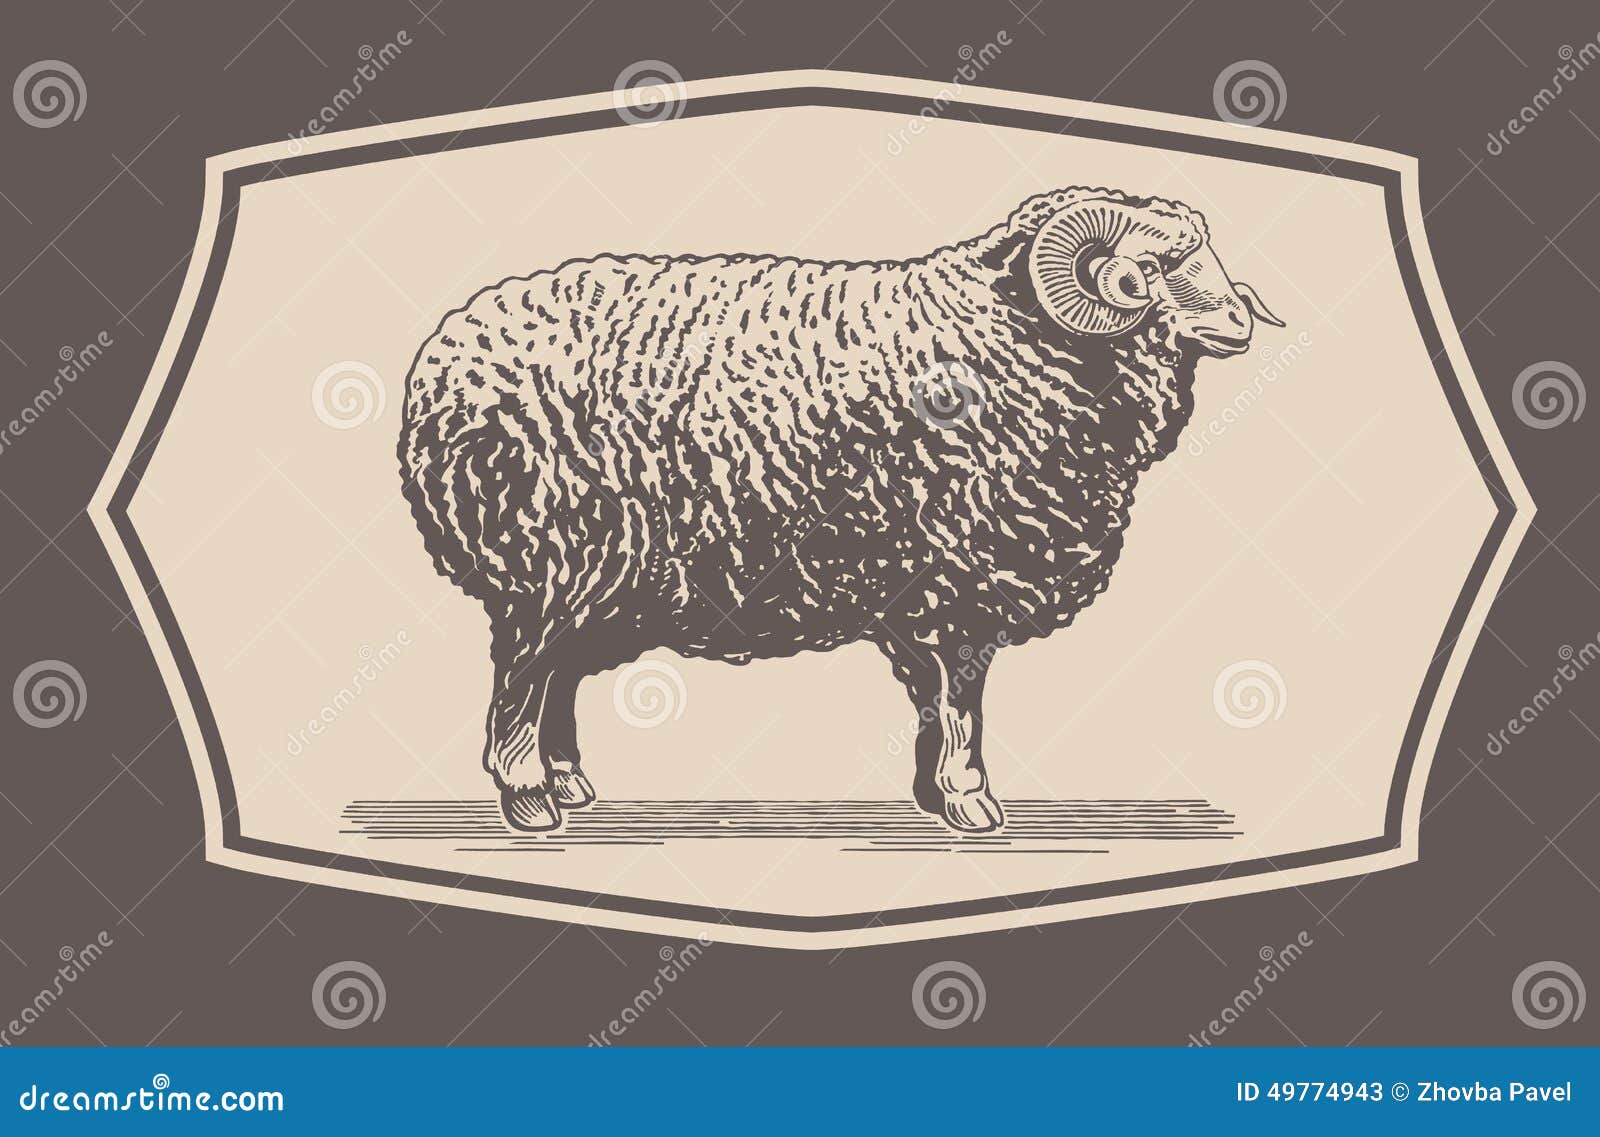 graphical ram, sheep